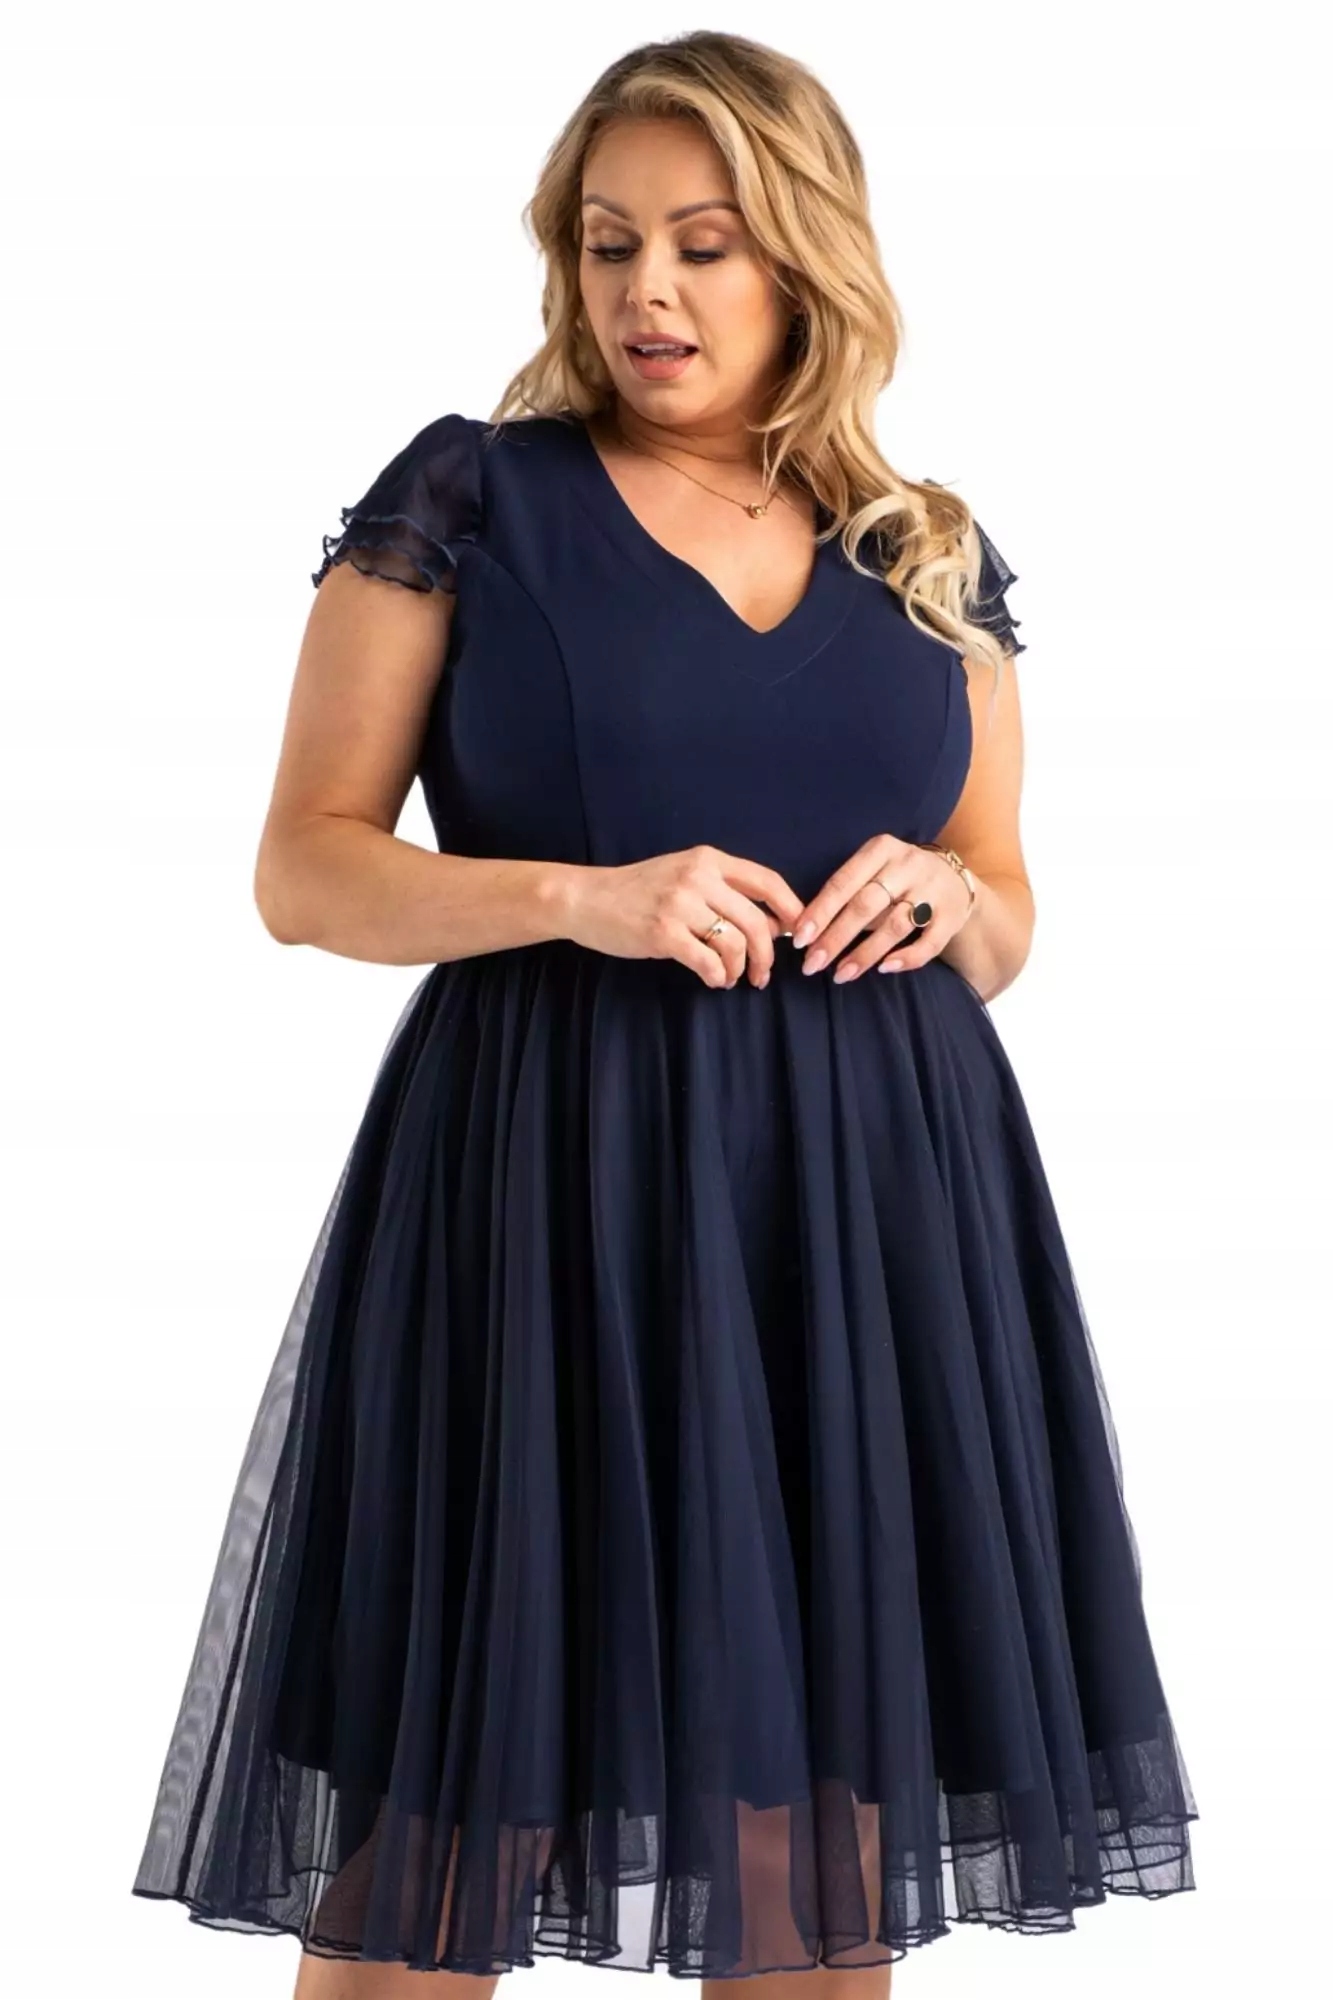 Tiulowa galowa sukienka plus size 46/48 na wesele 11972684370 - Allegro.pl